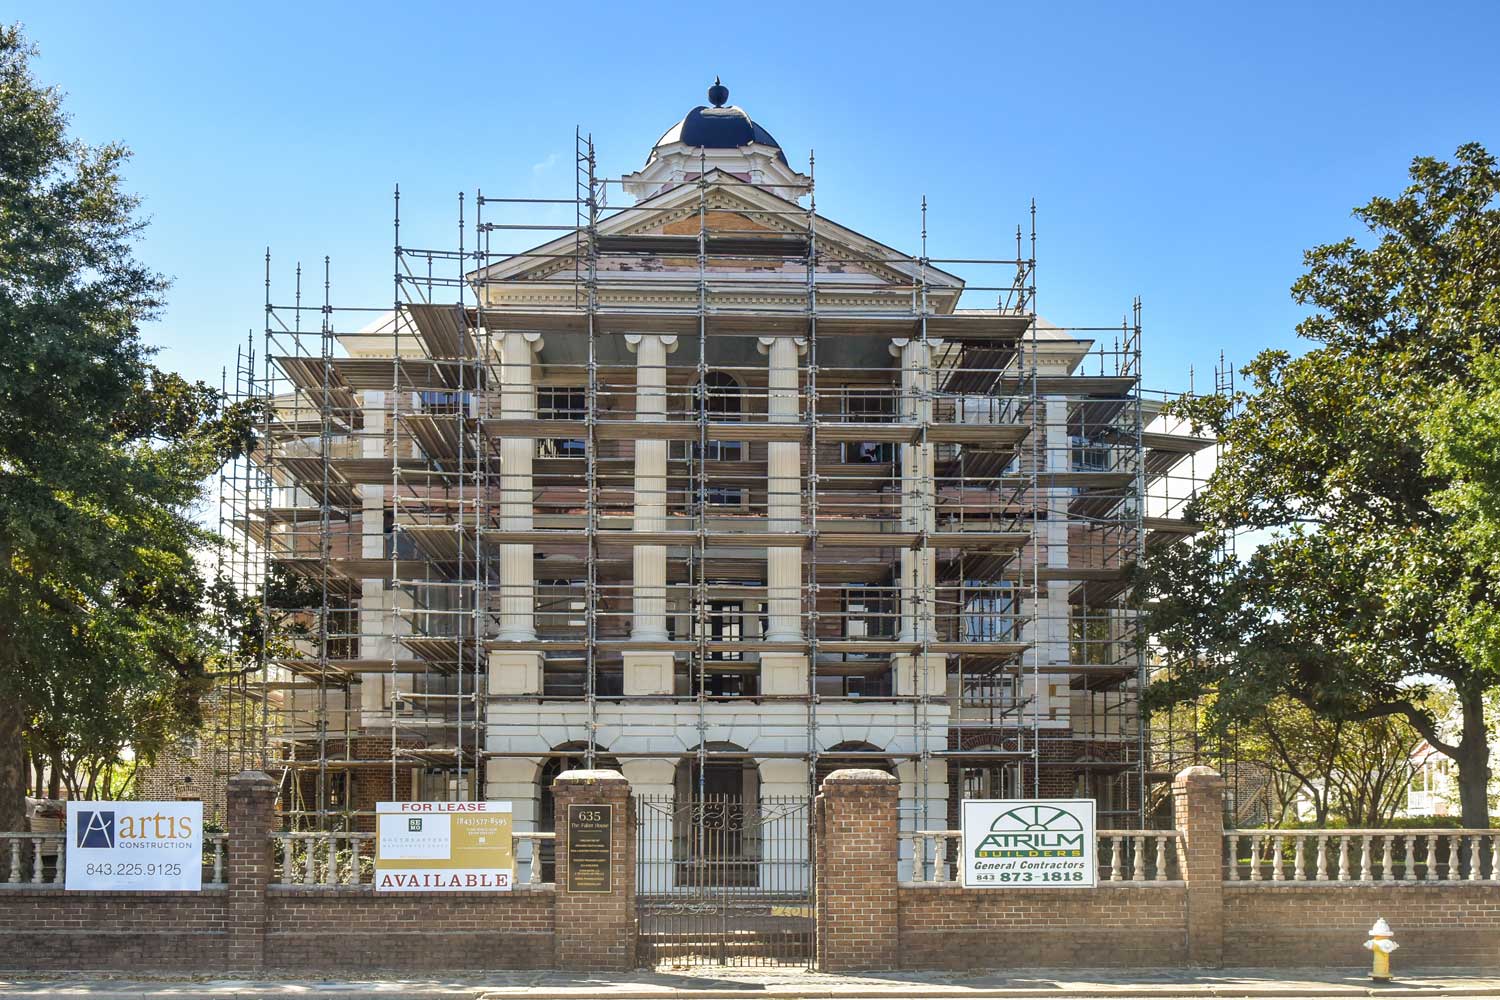 historic-charleston-house-complete-restoration-progress.jpg